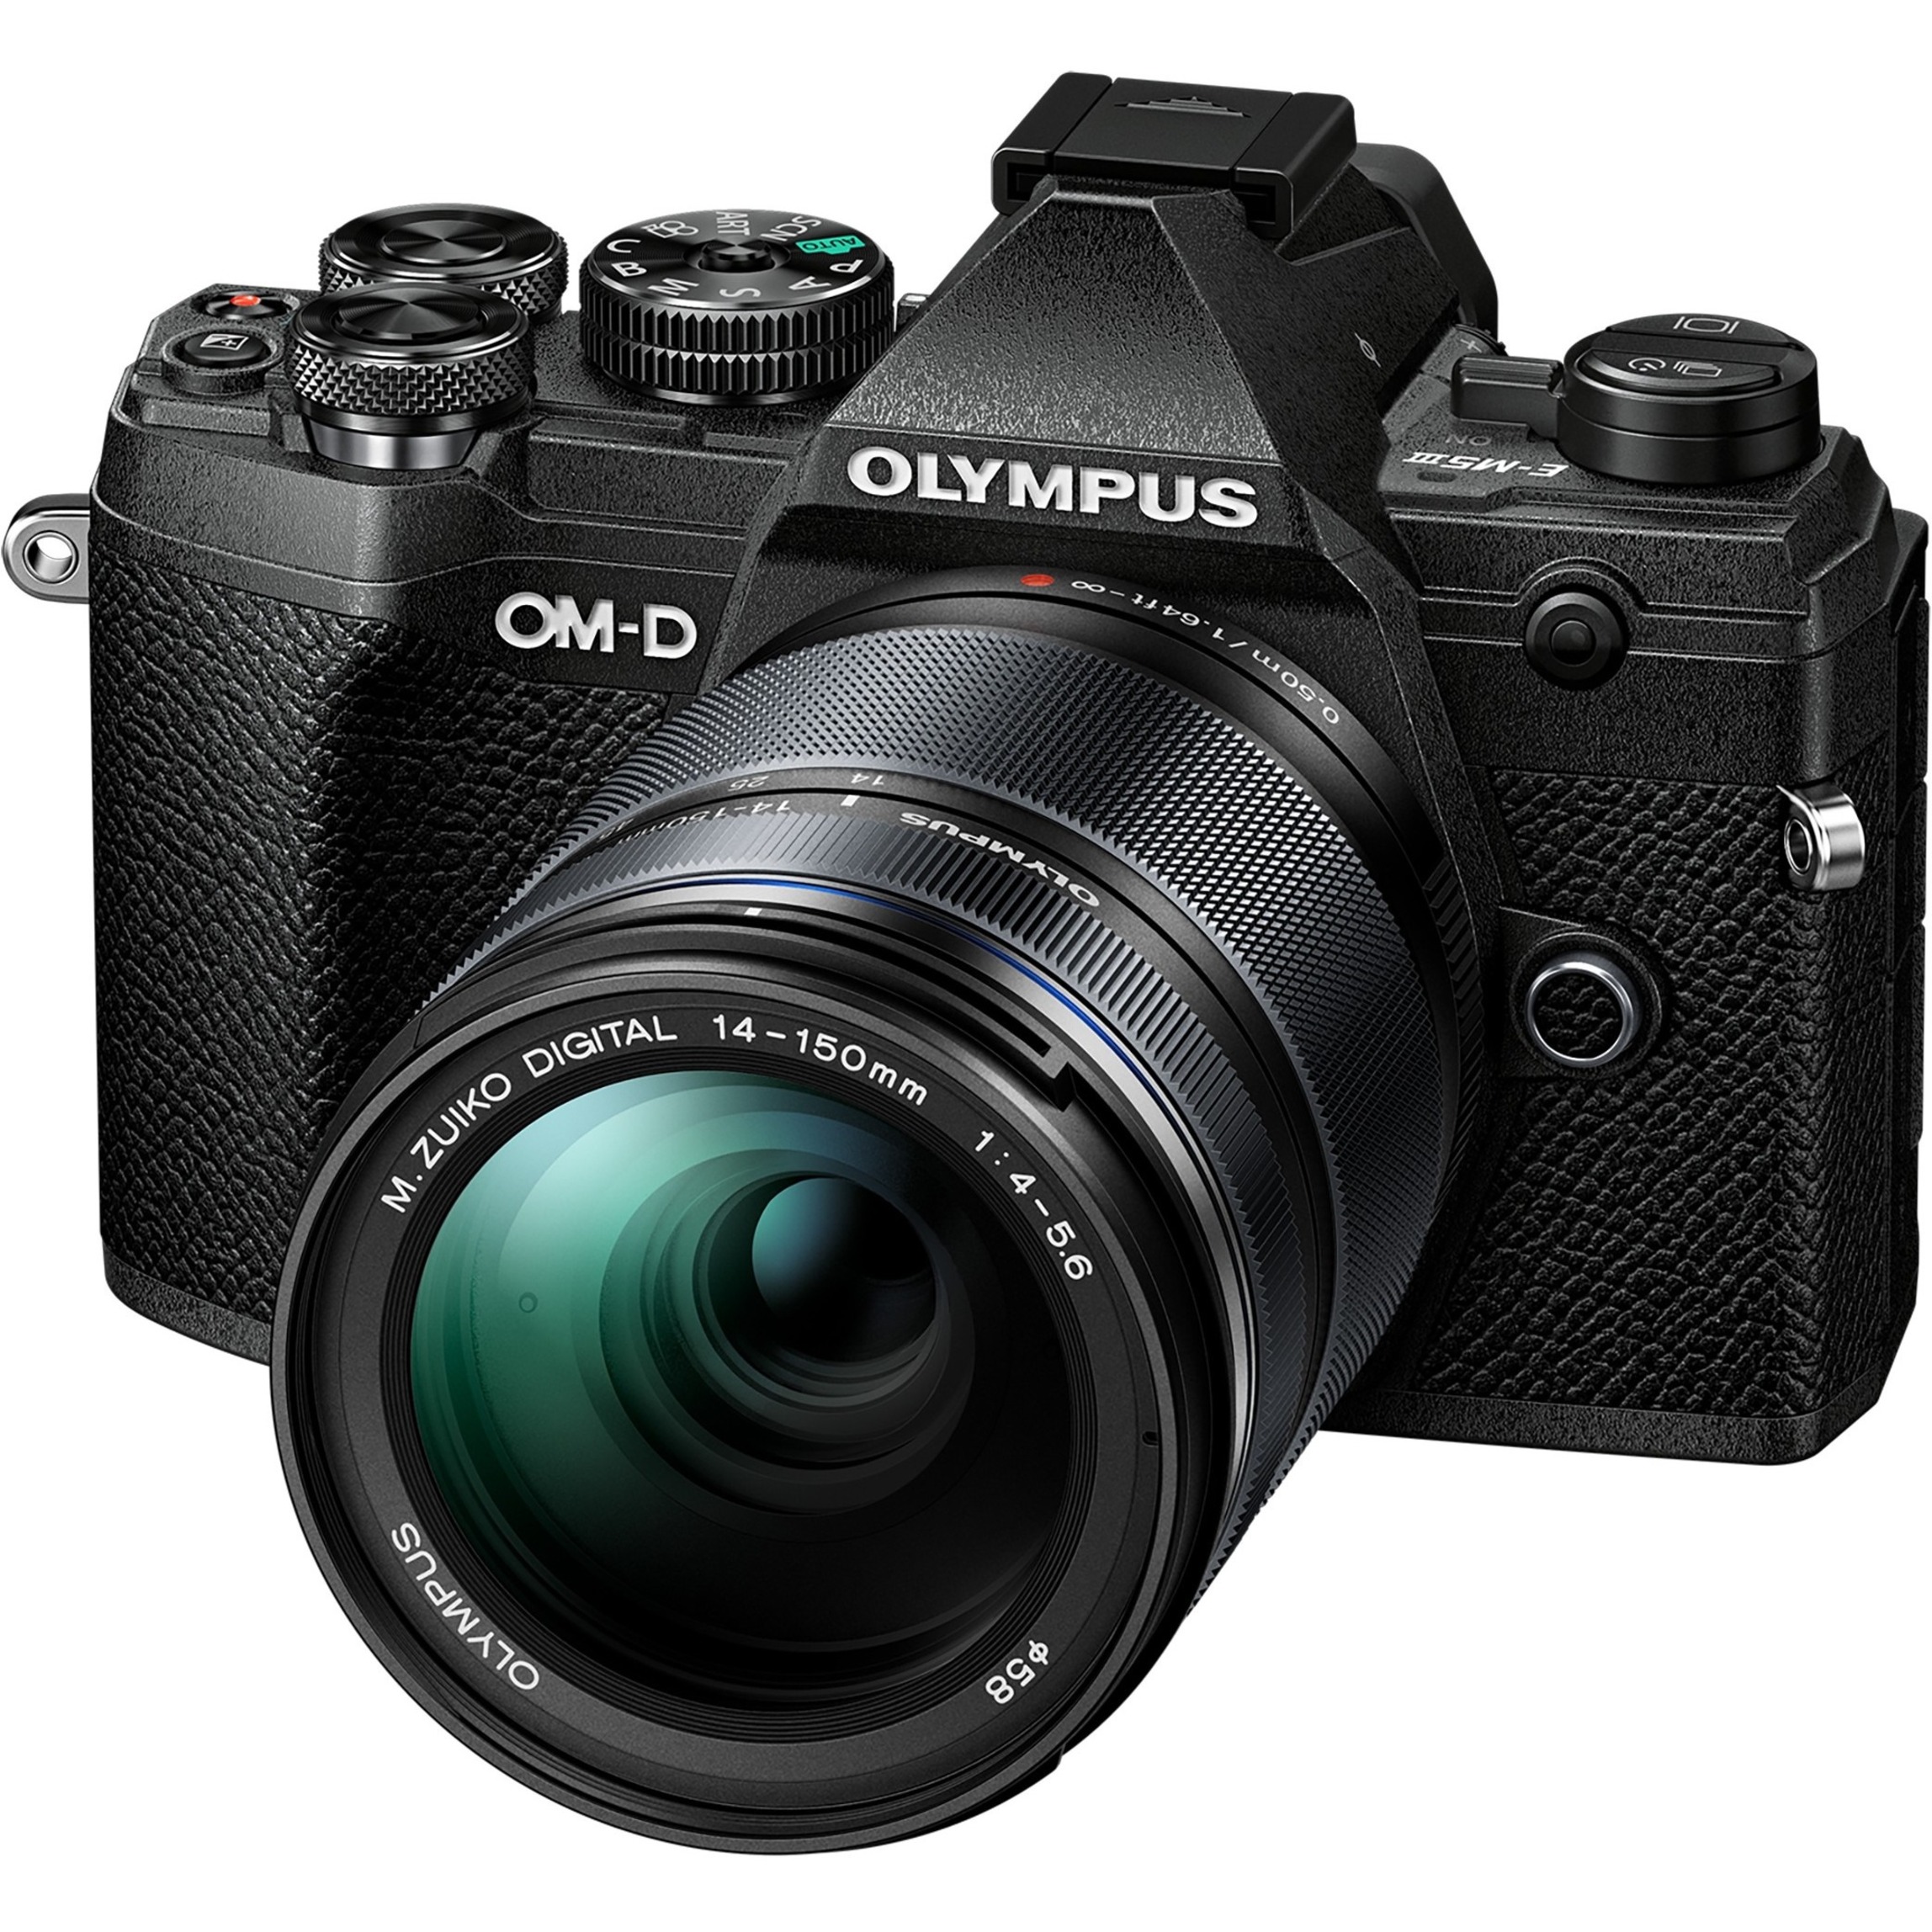 Olympus OM-D E-M5 Mark III 20.4 Megapixel Mirrorless Camera with Lens,  0.55", 5.91", Black